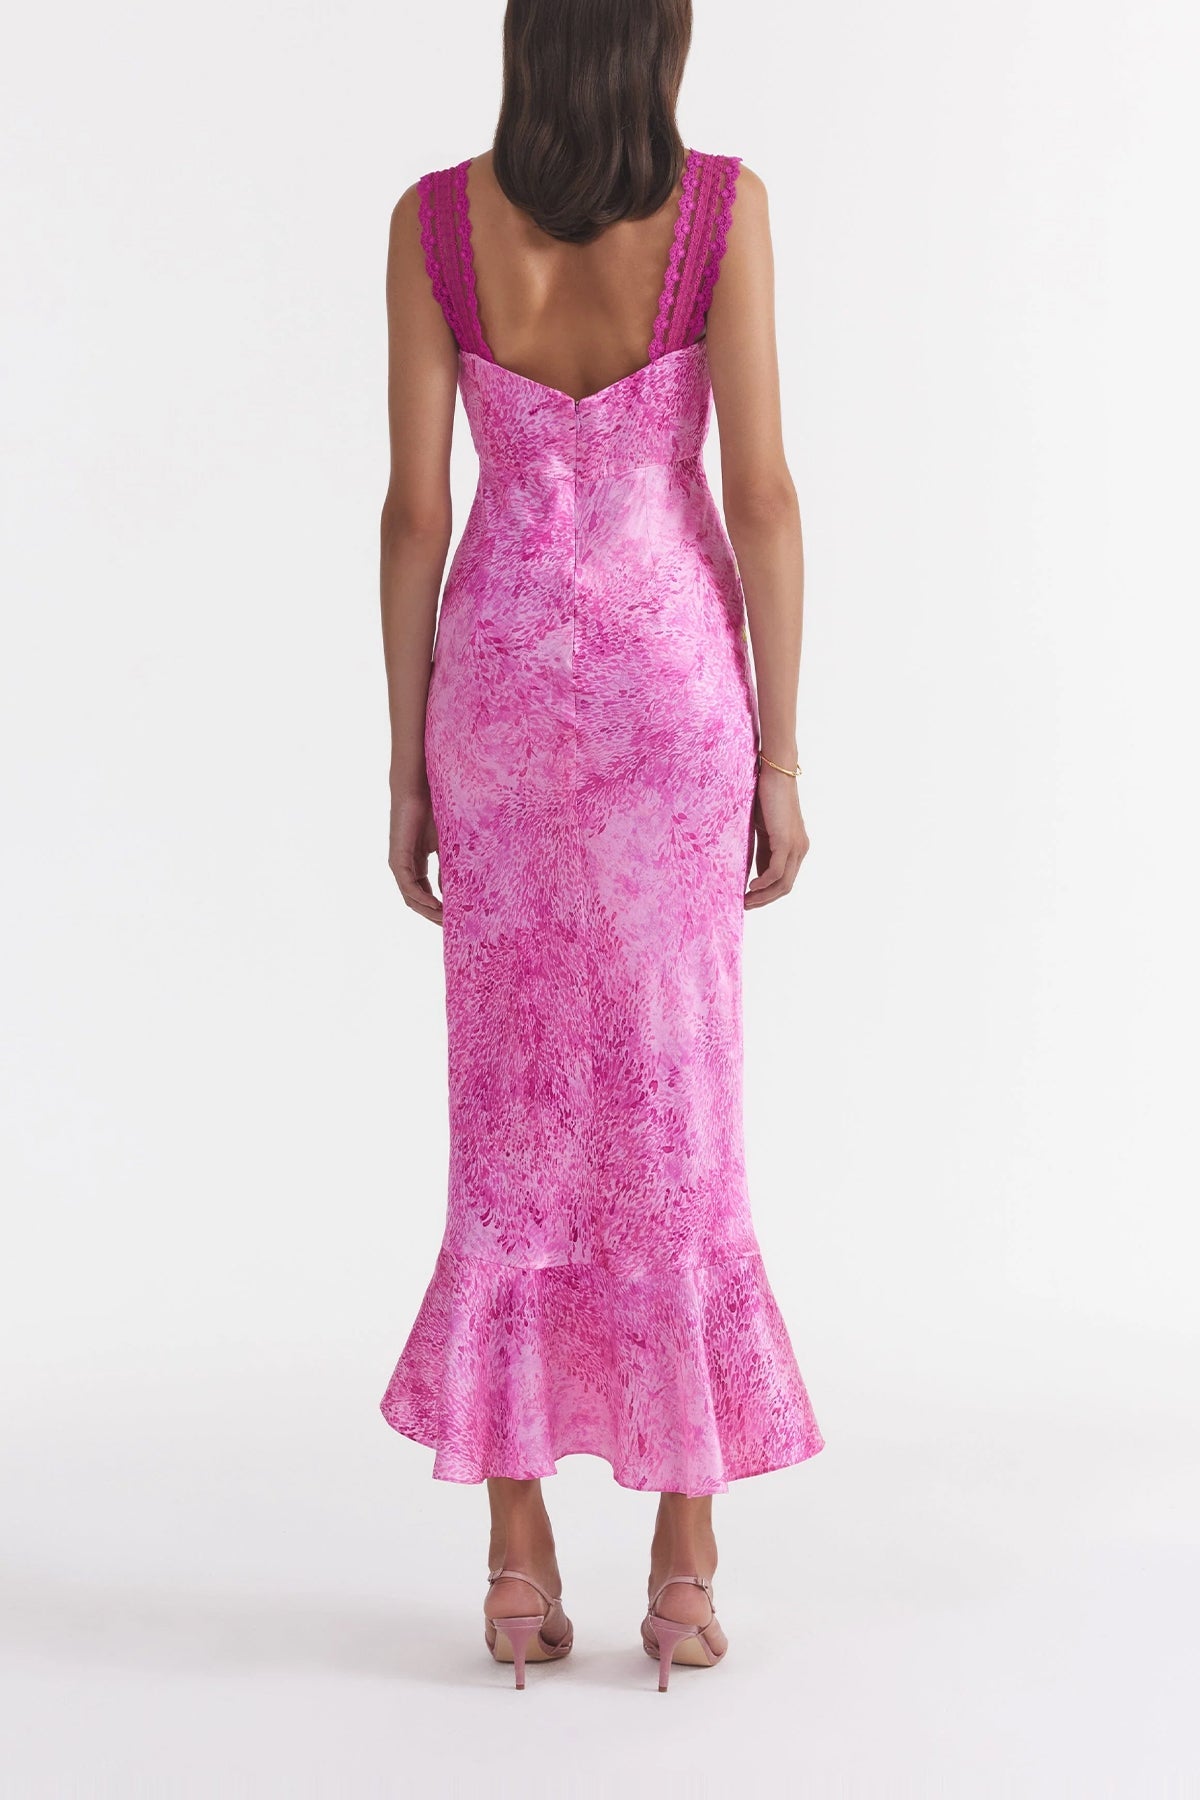 Mimi C Dress in Thistledown Blossom - shop-olivia.com